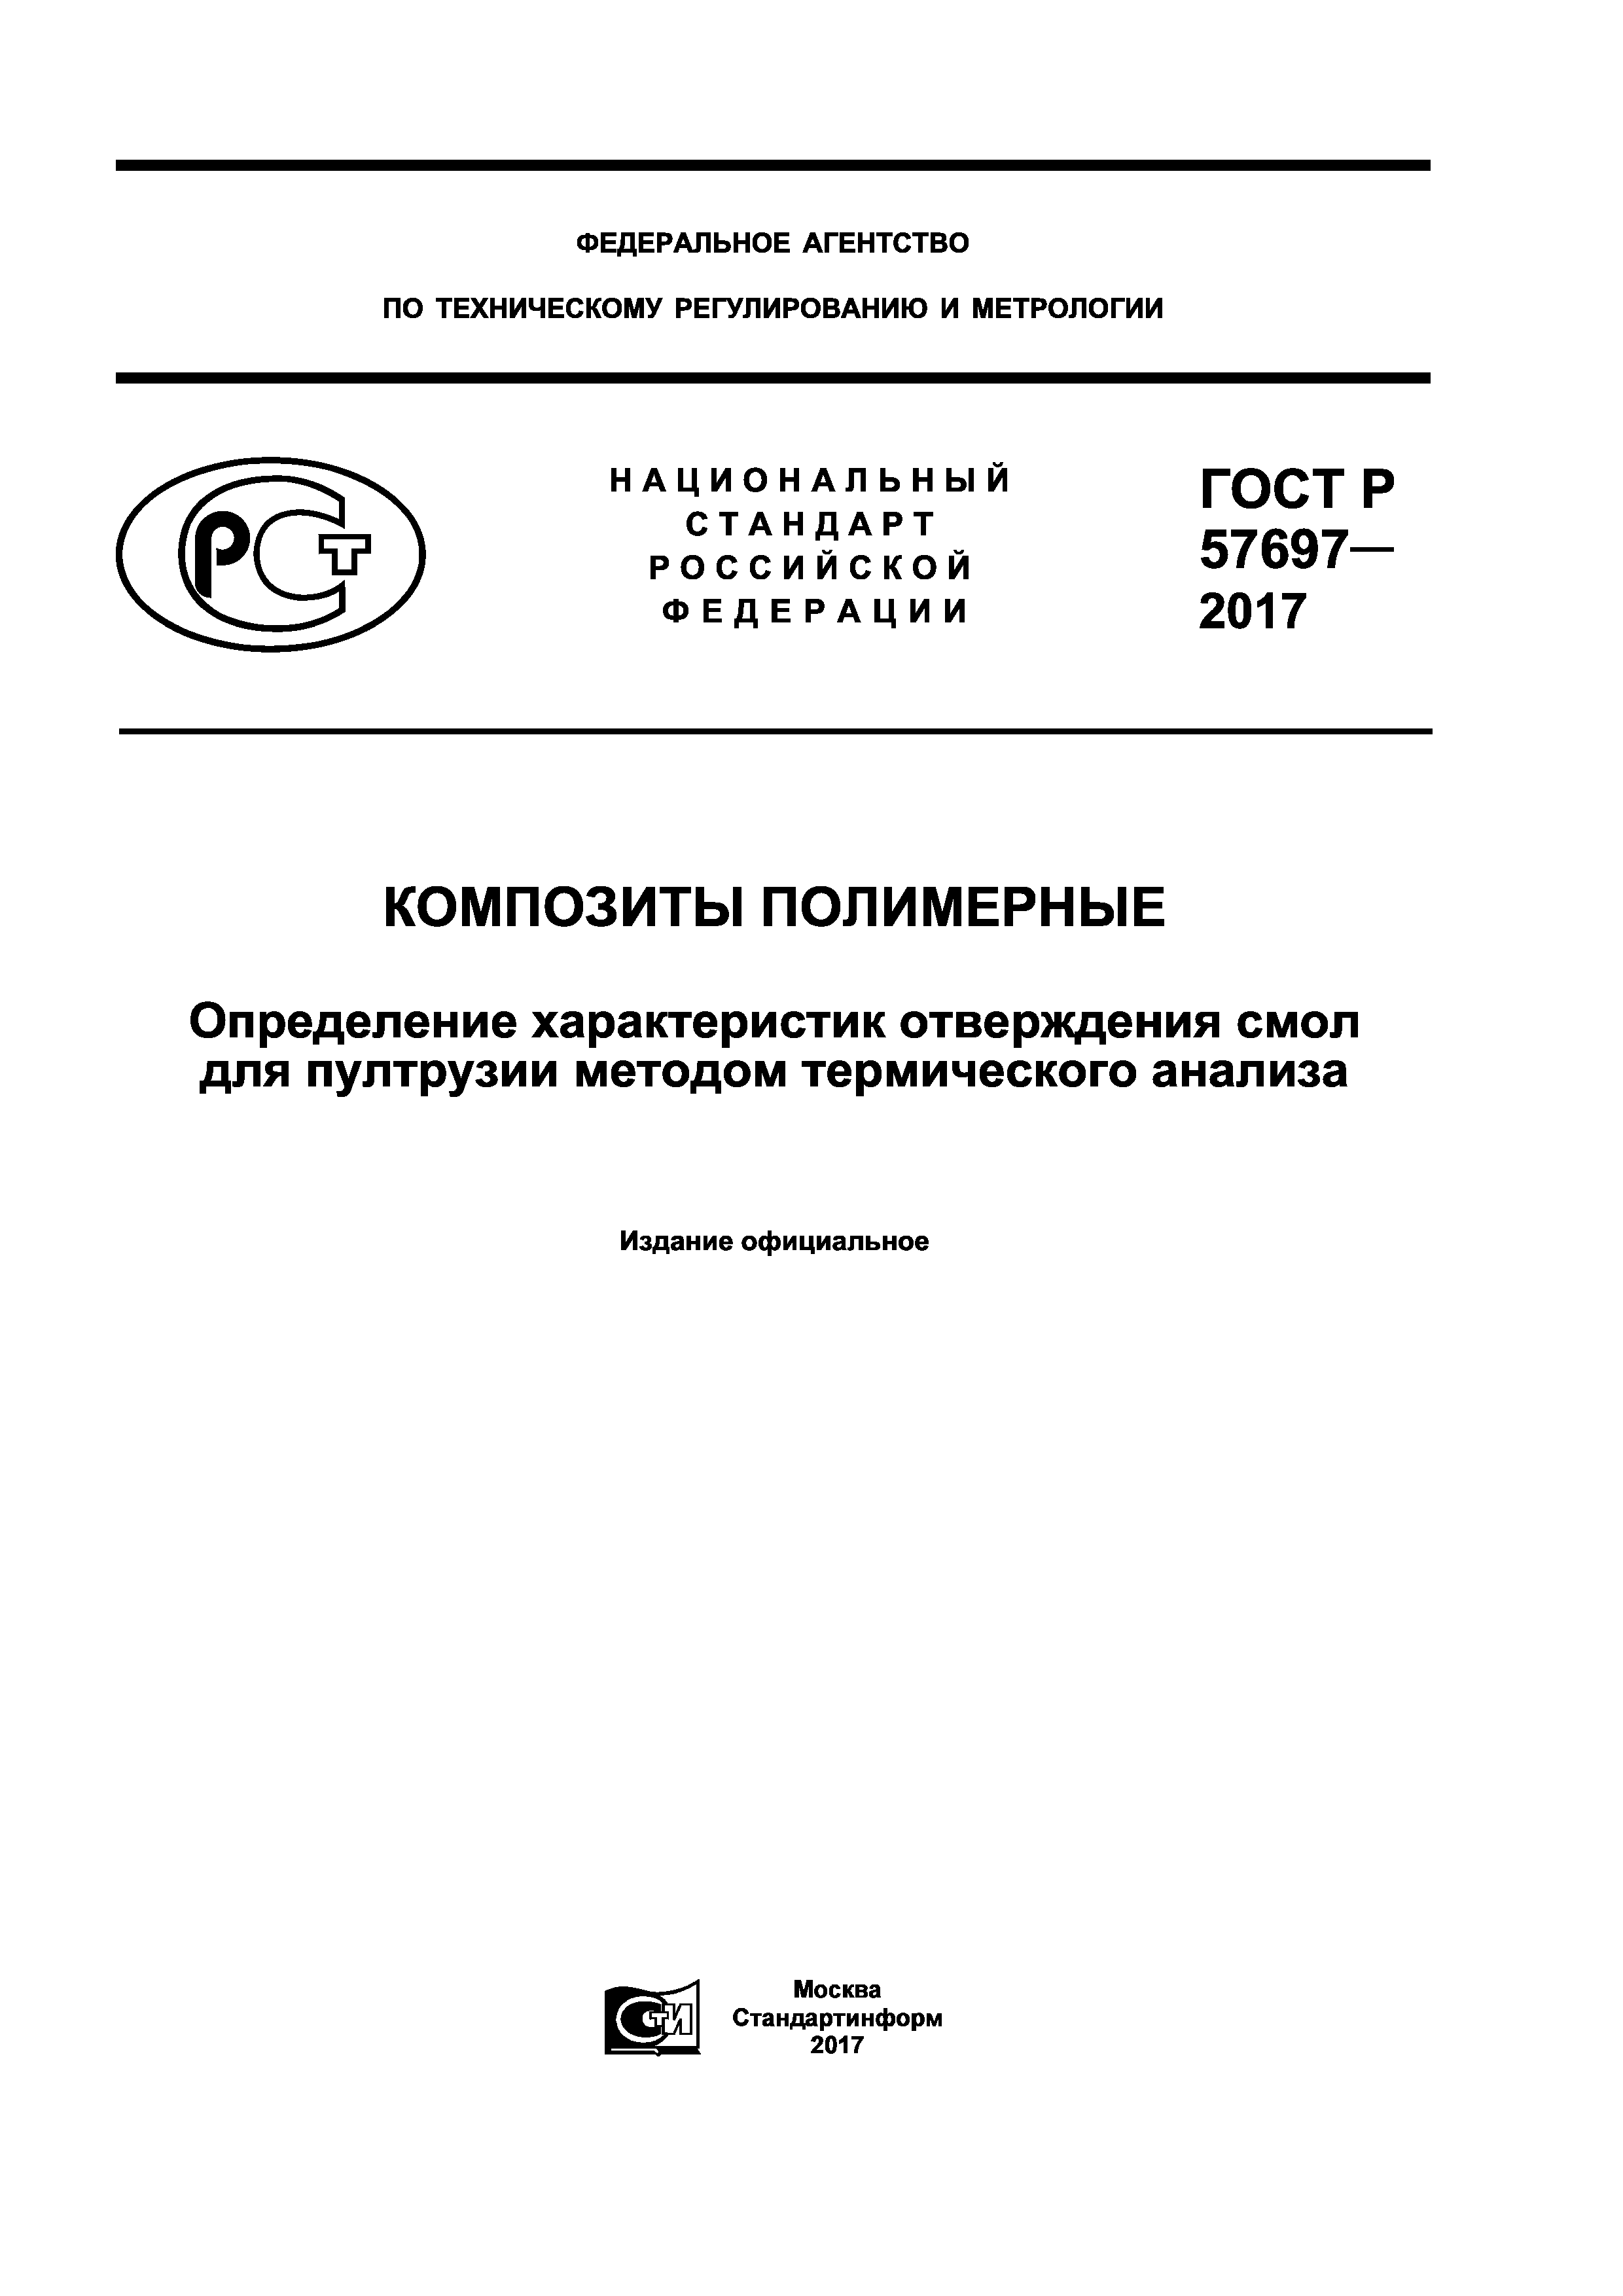 ГОСТ Р 57697-2017